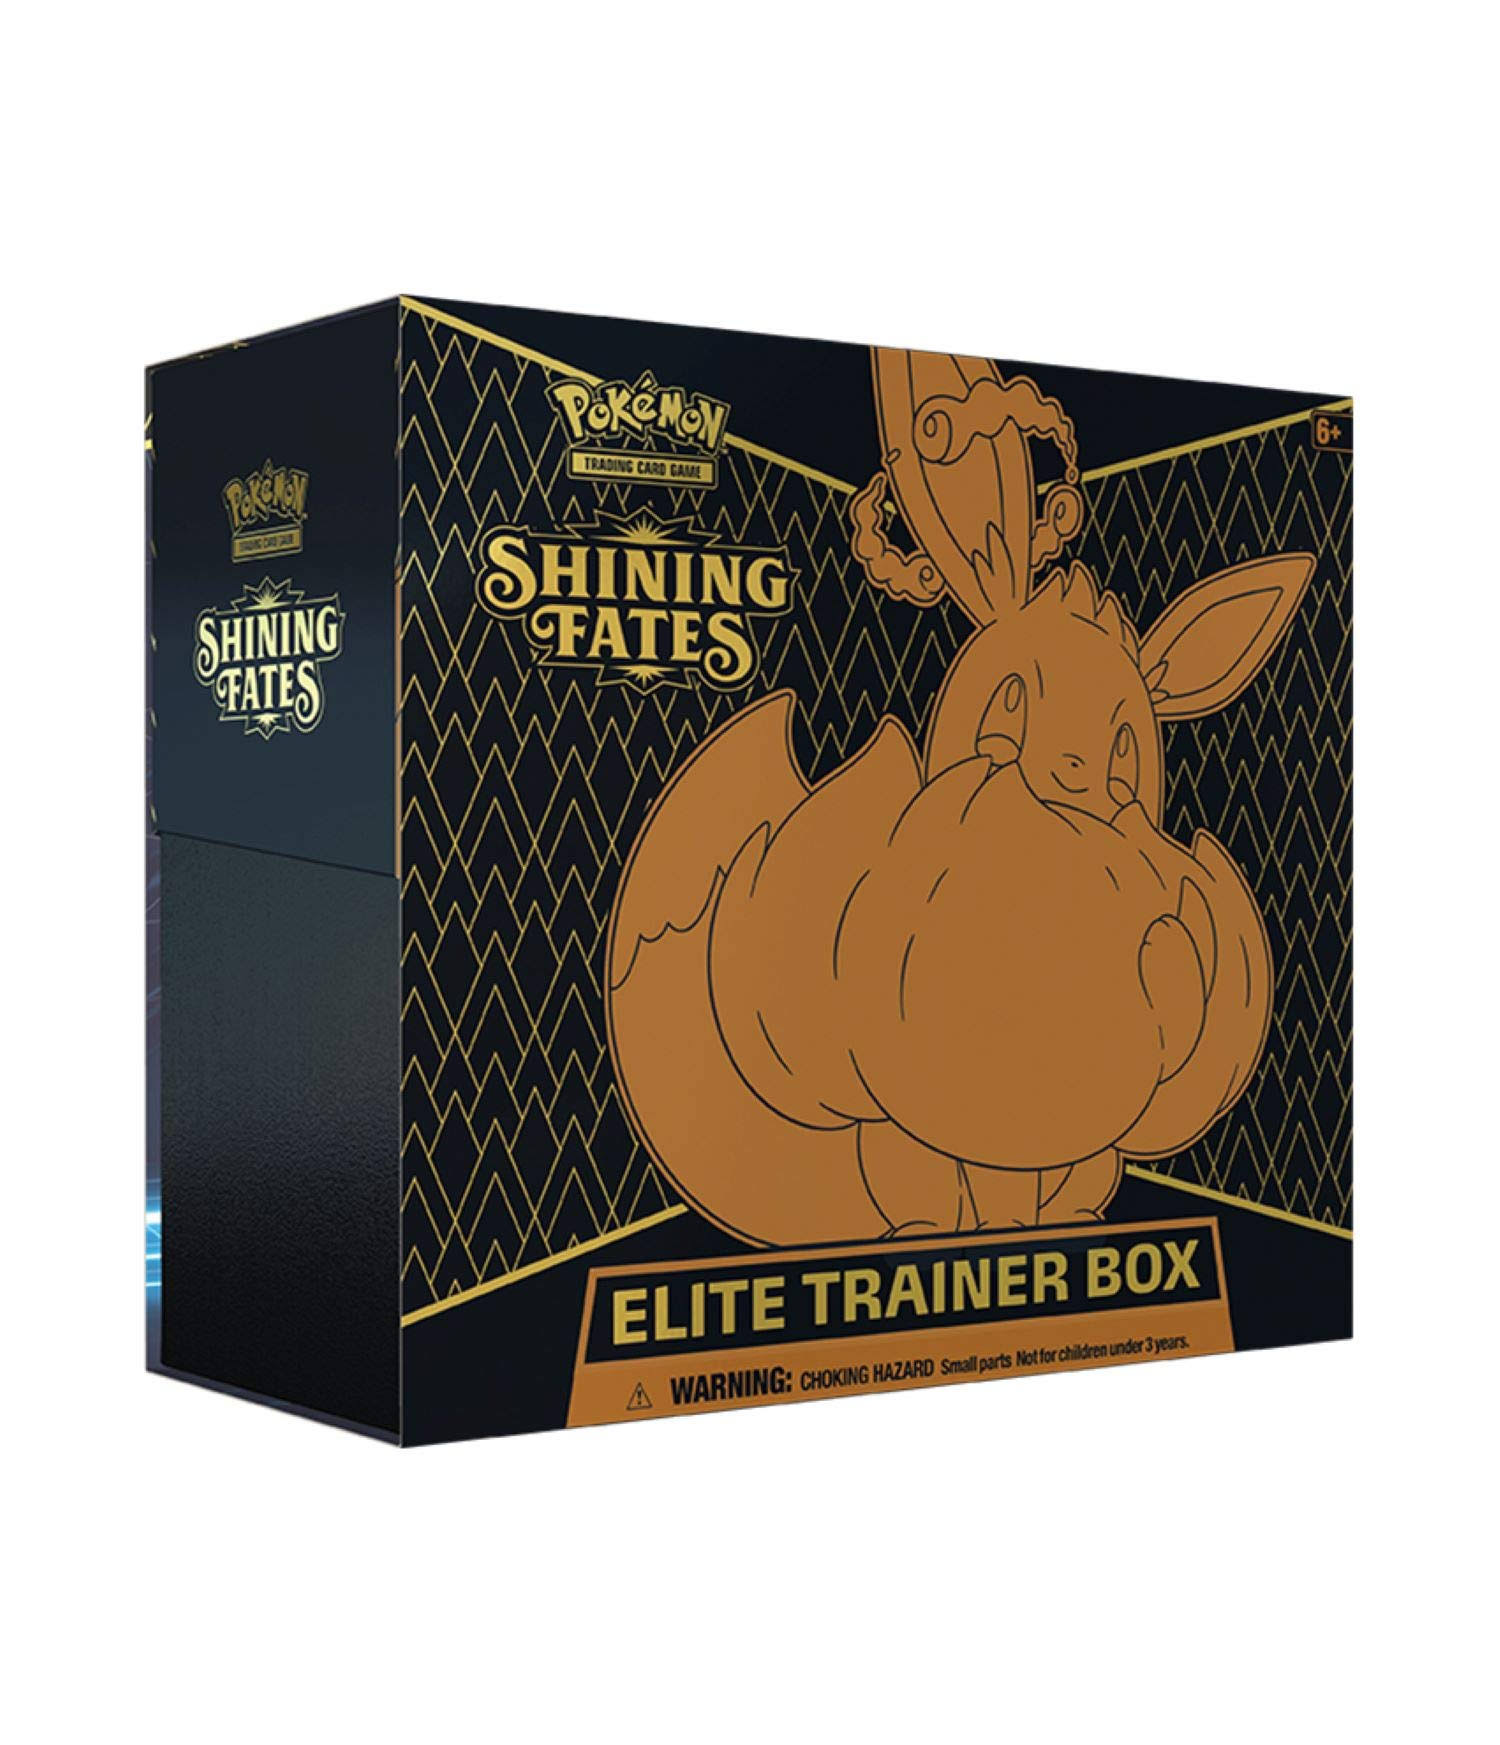 Elite Trainer Box - Shining Fates (Pokemon)